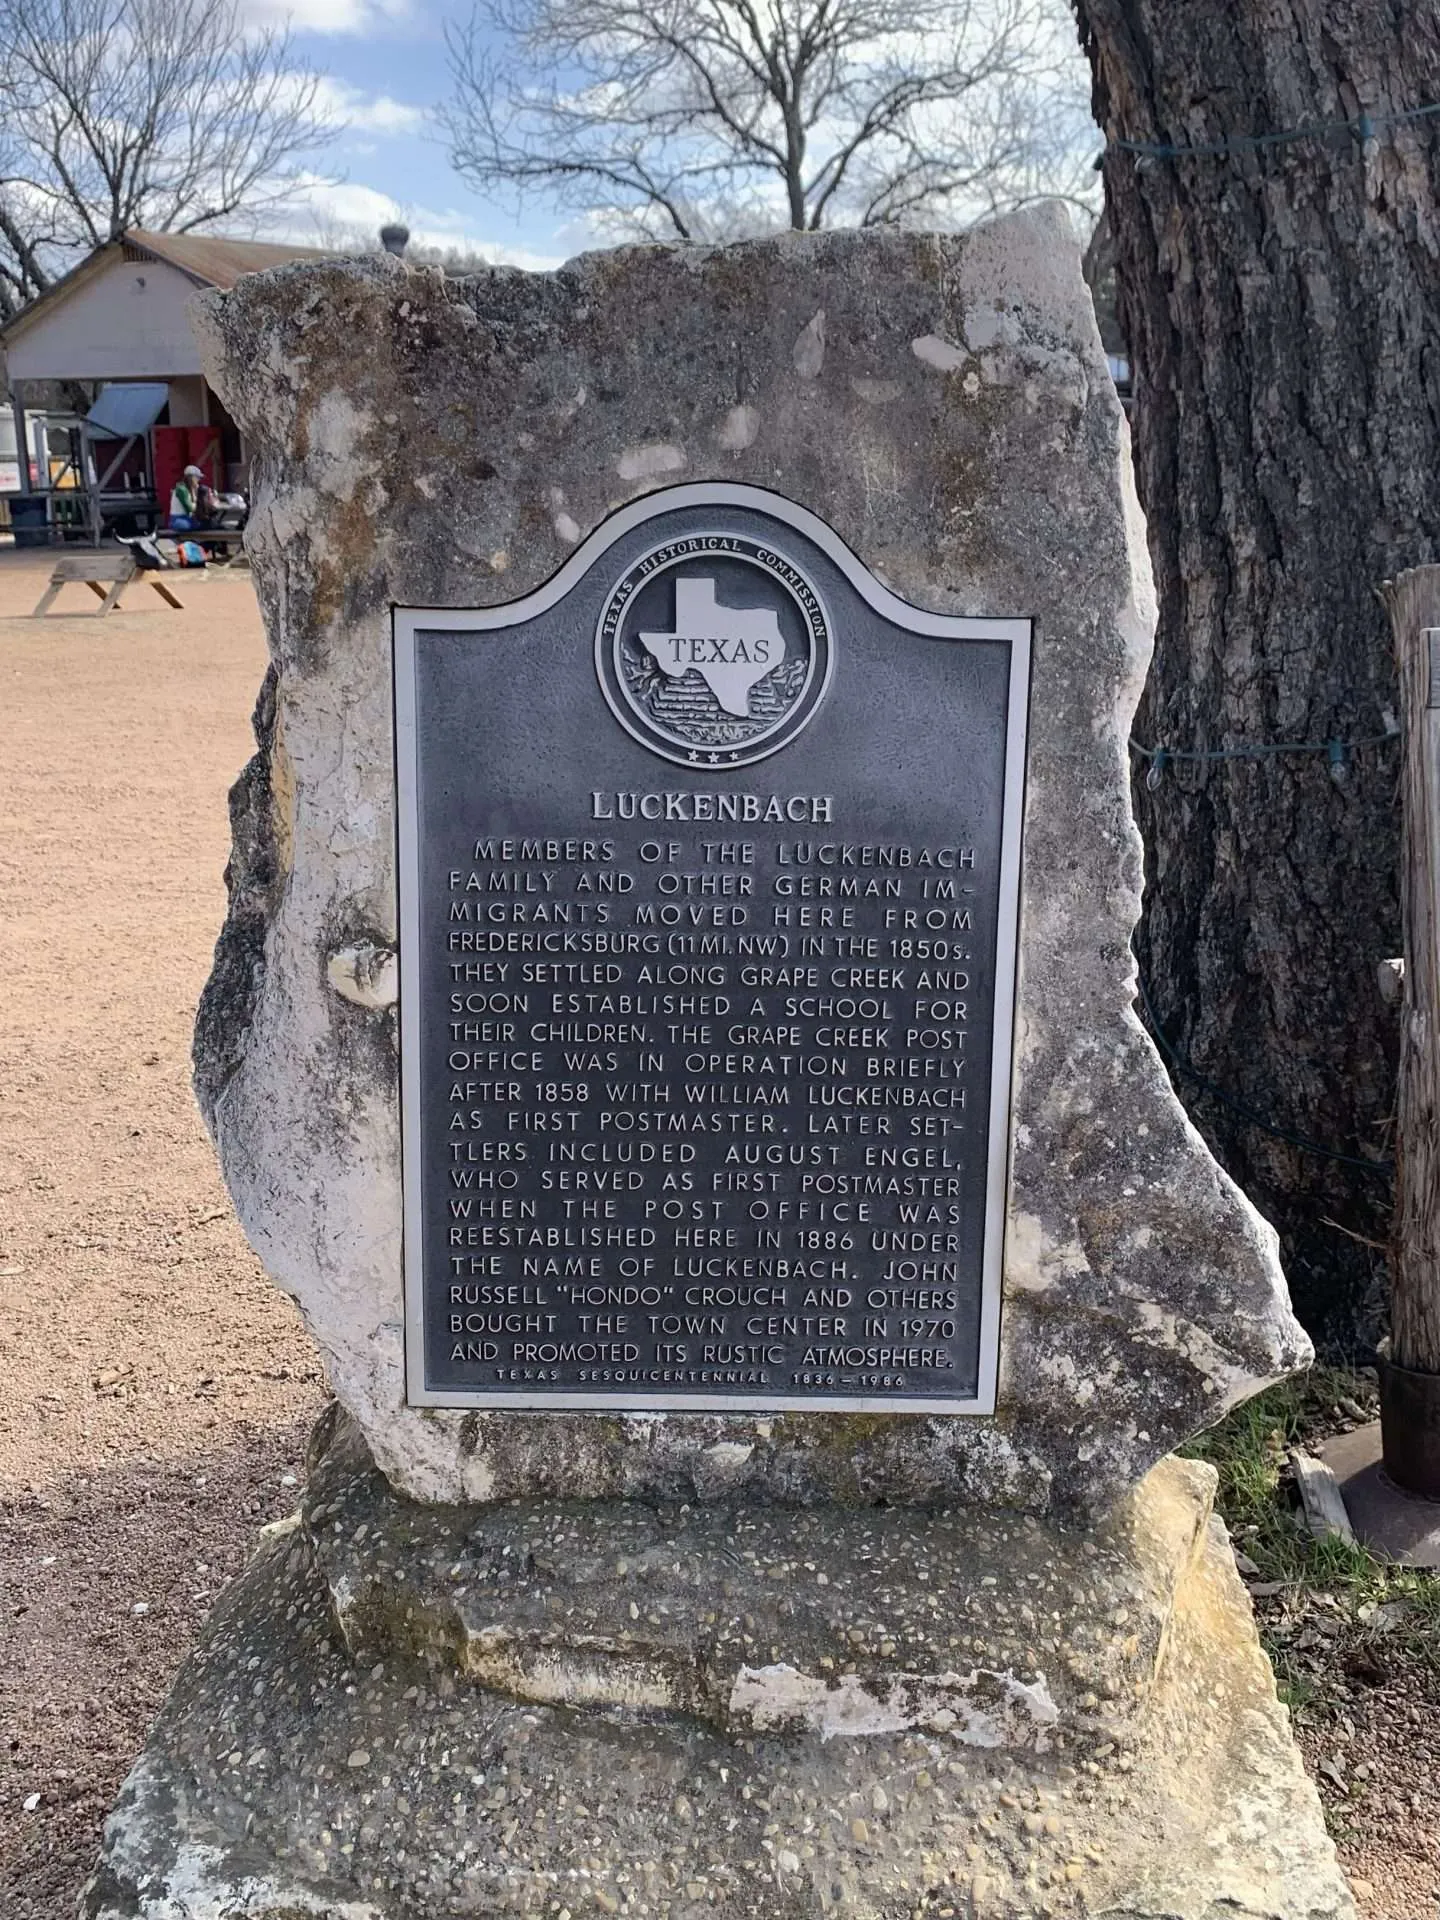 Historical marker in Luckenbach, Texas.